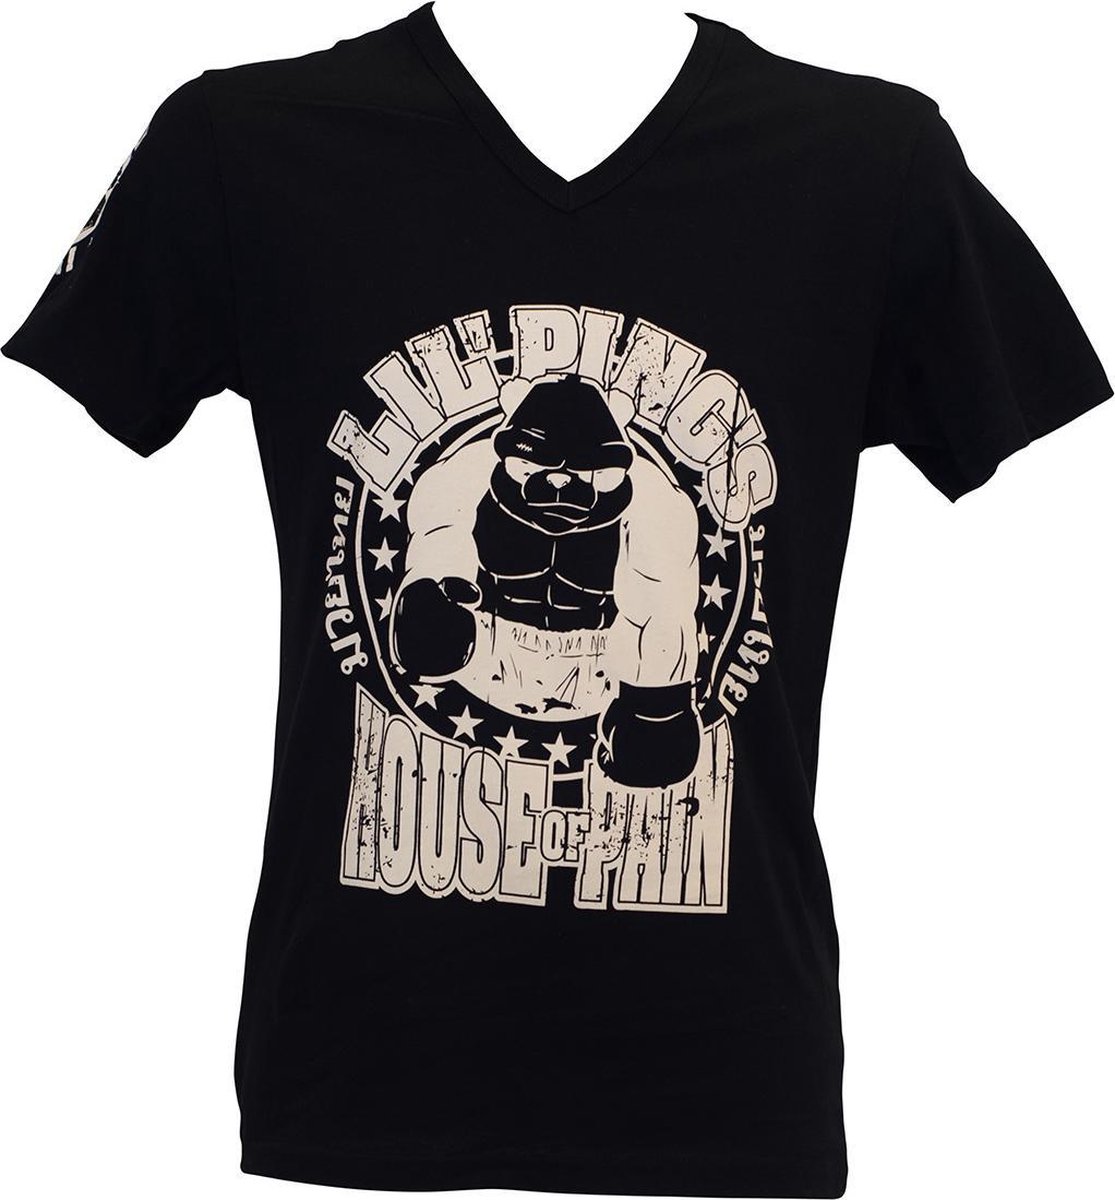 Booster Lil Pings T Shirt Black White Vechtsport Shop Drenthe Kies uw maat: L